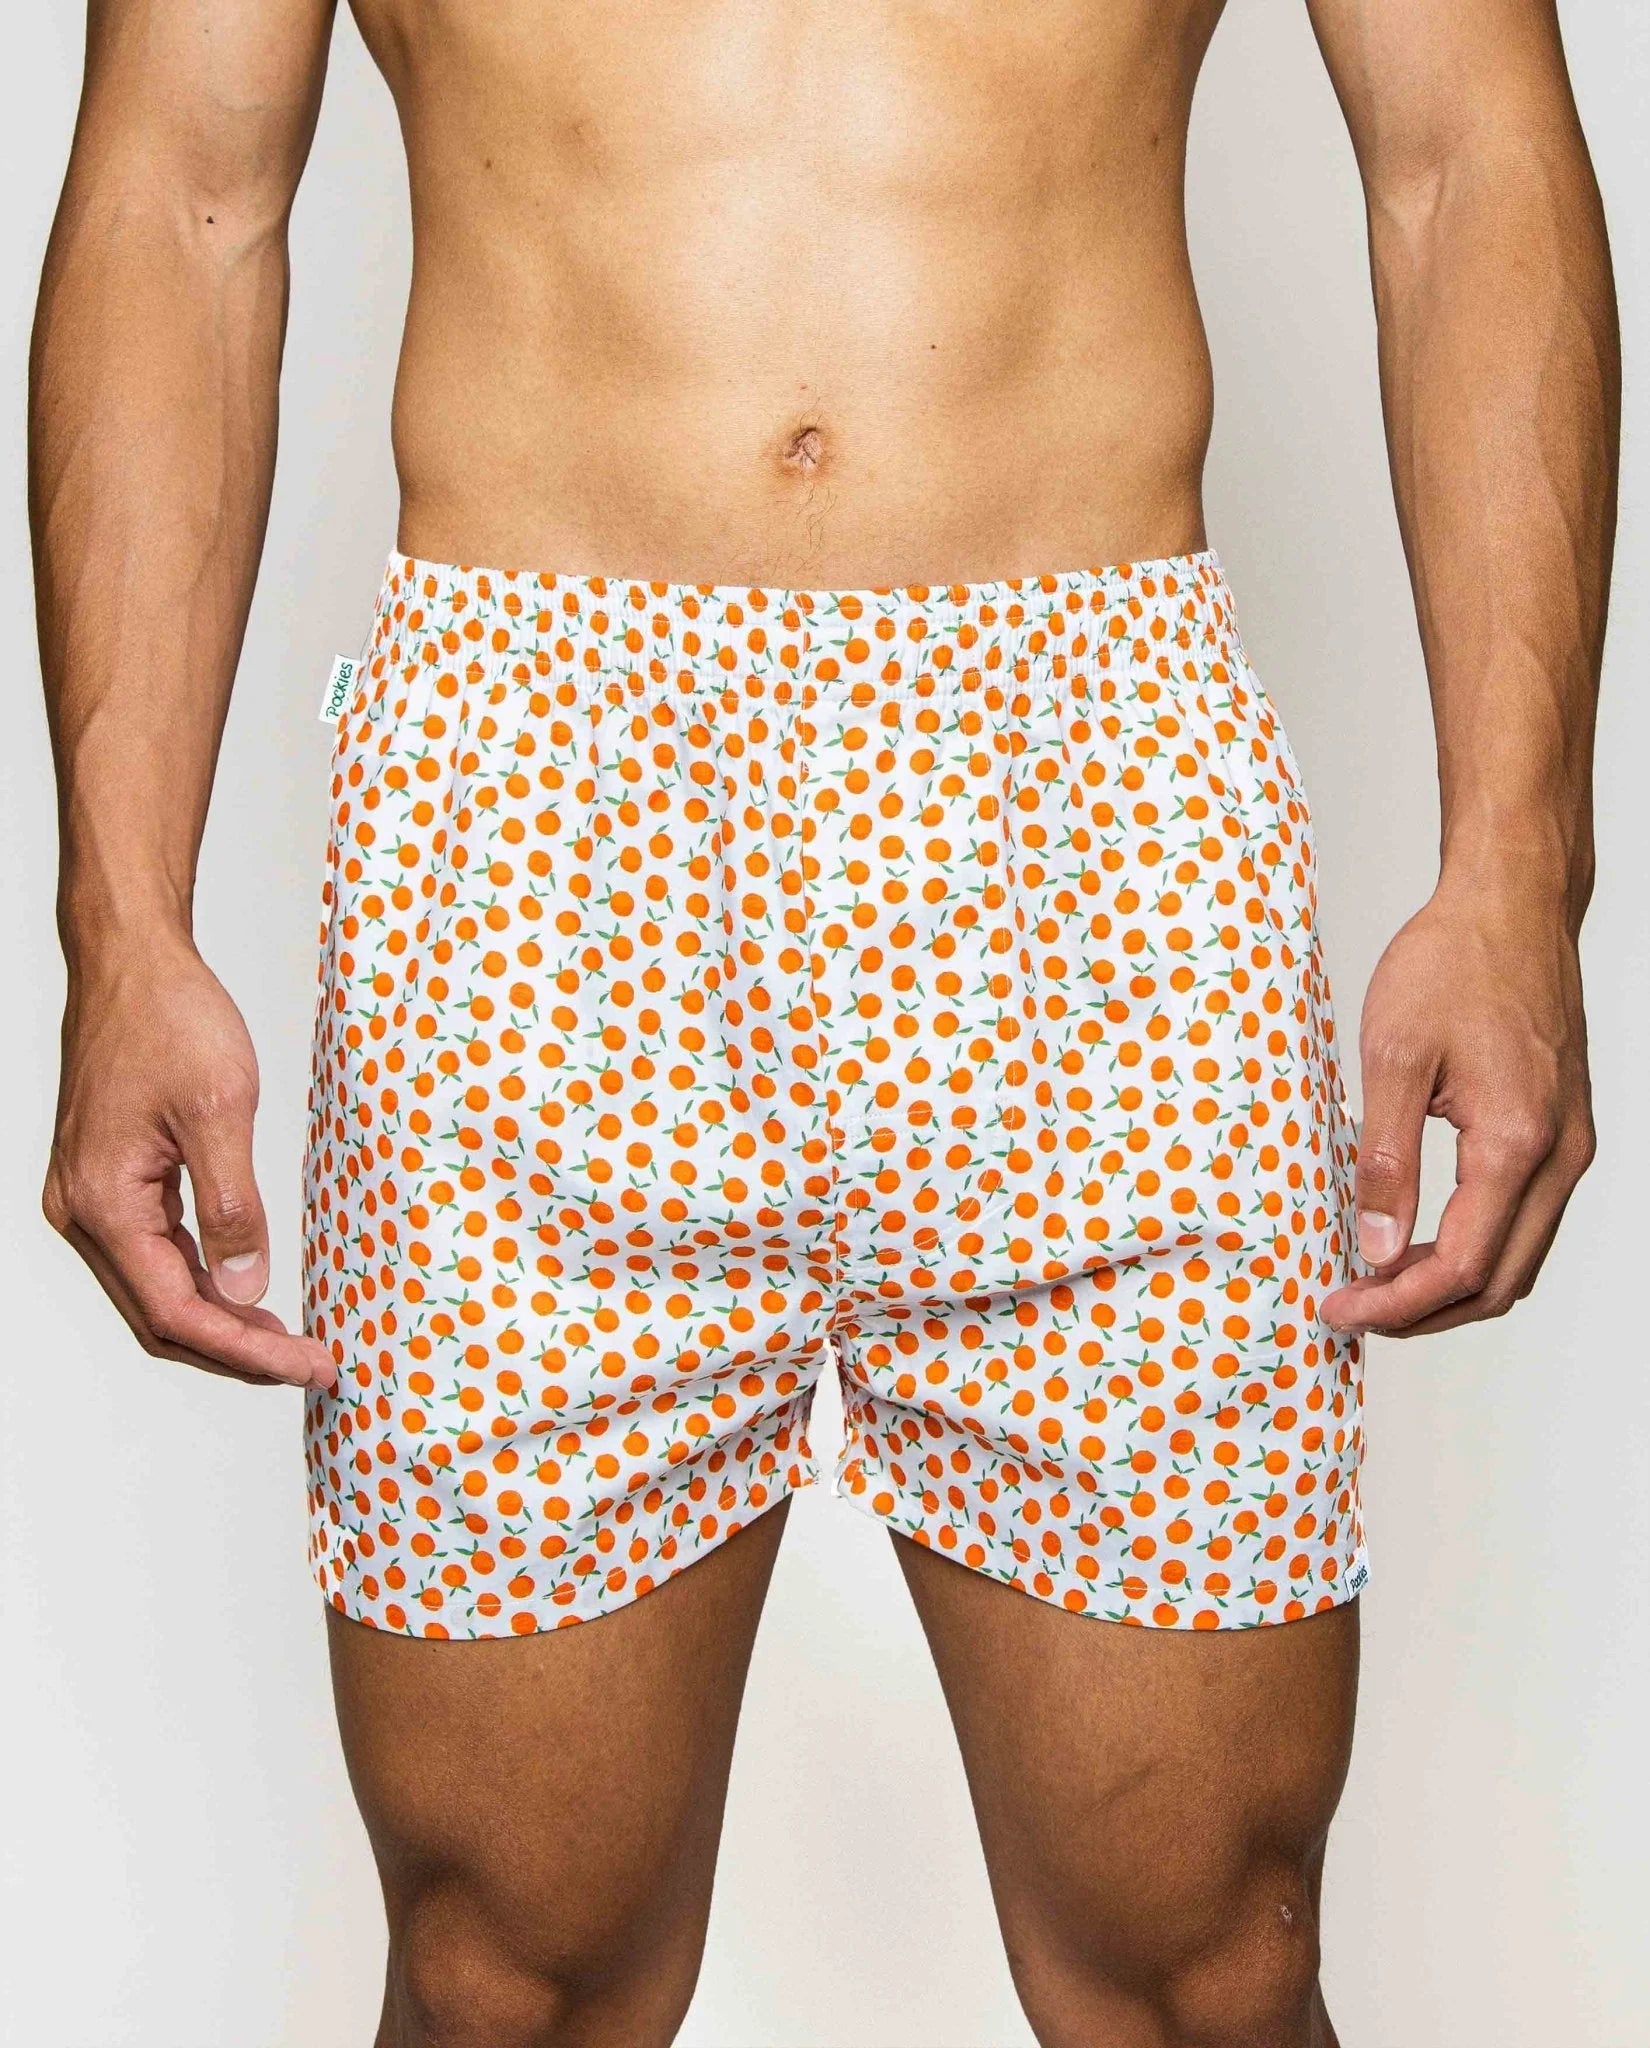 Pockies Boxer Shorts Oranges Orange